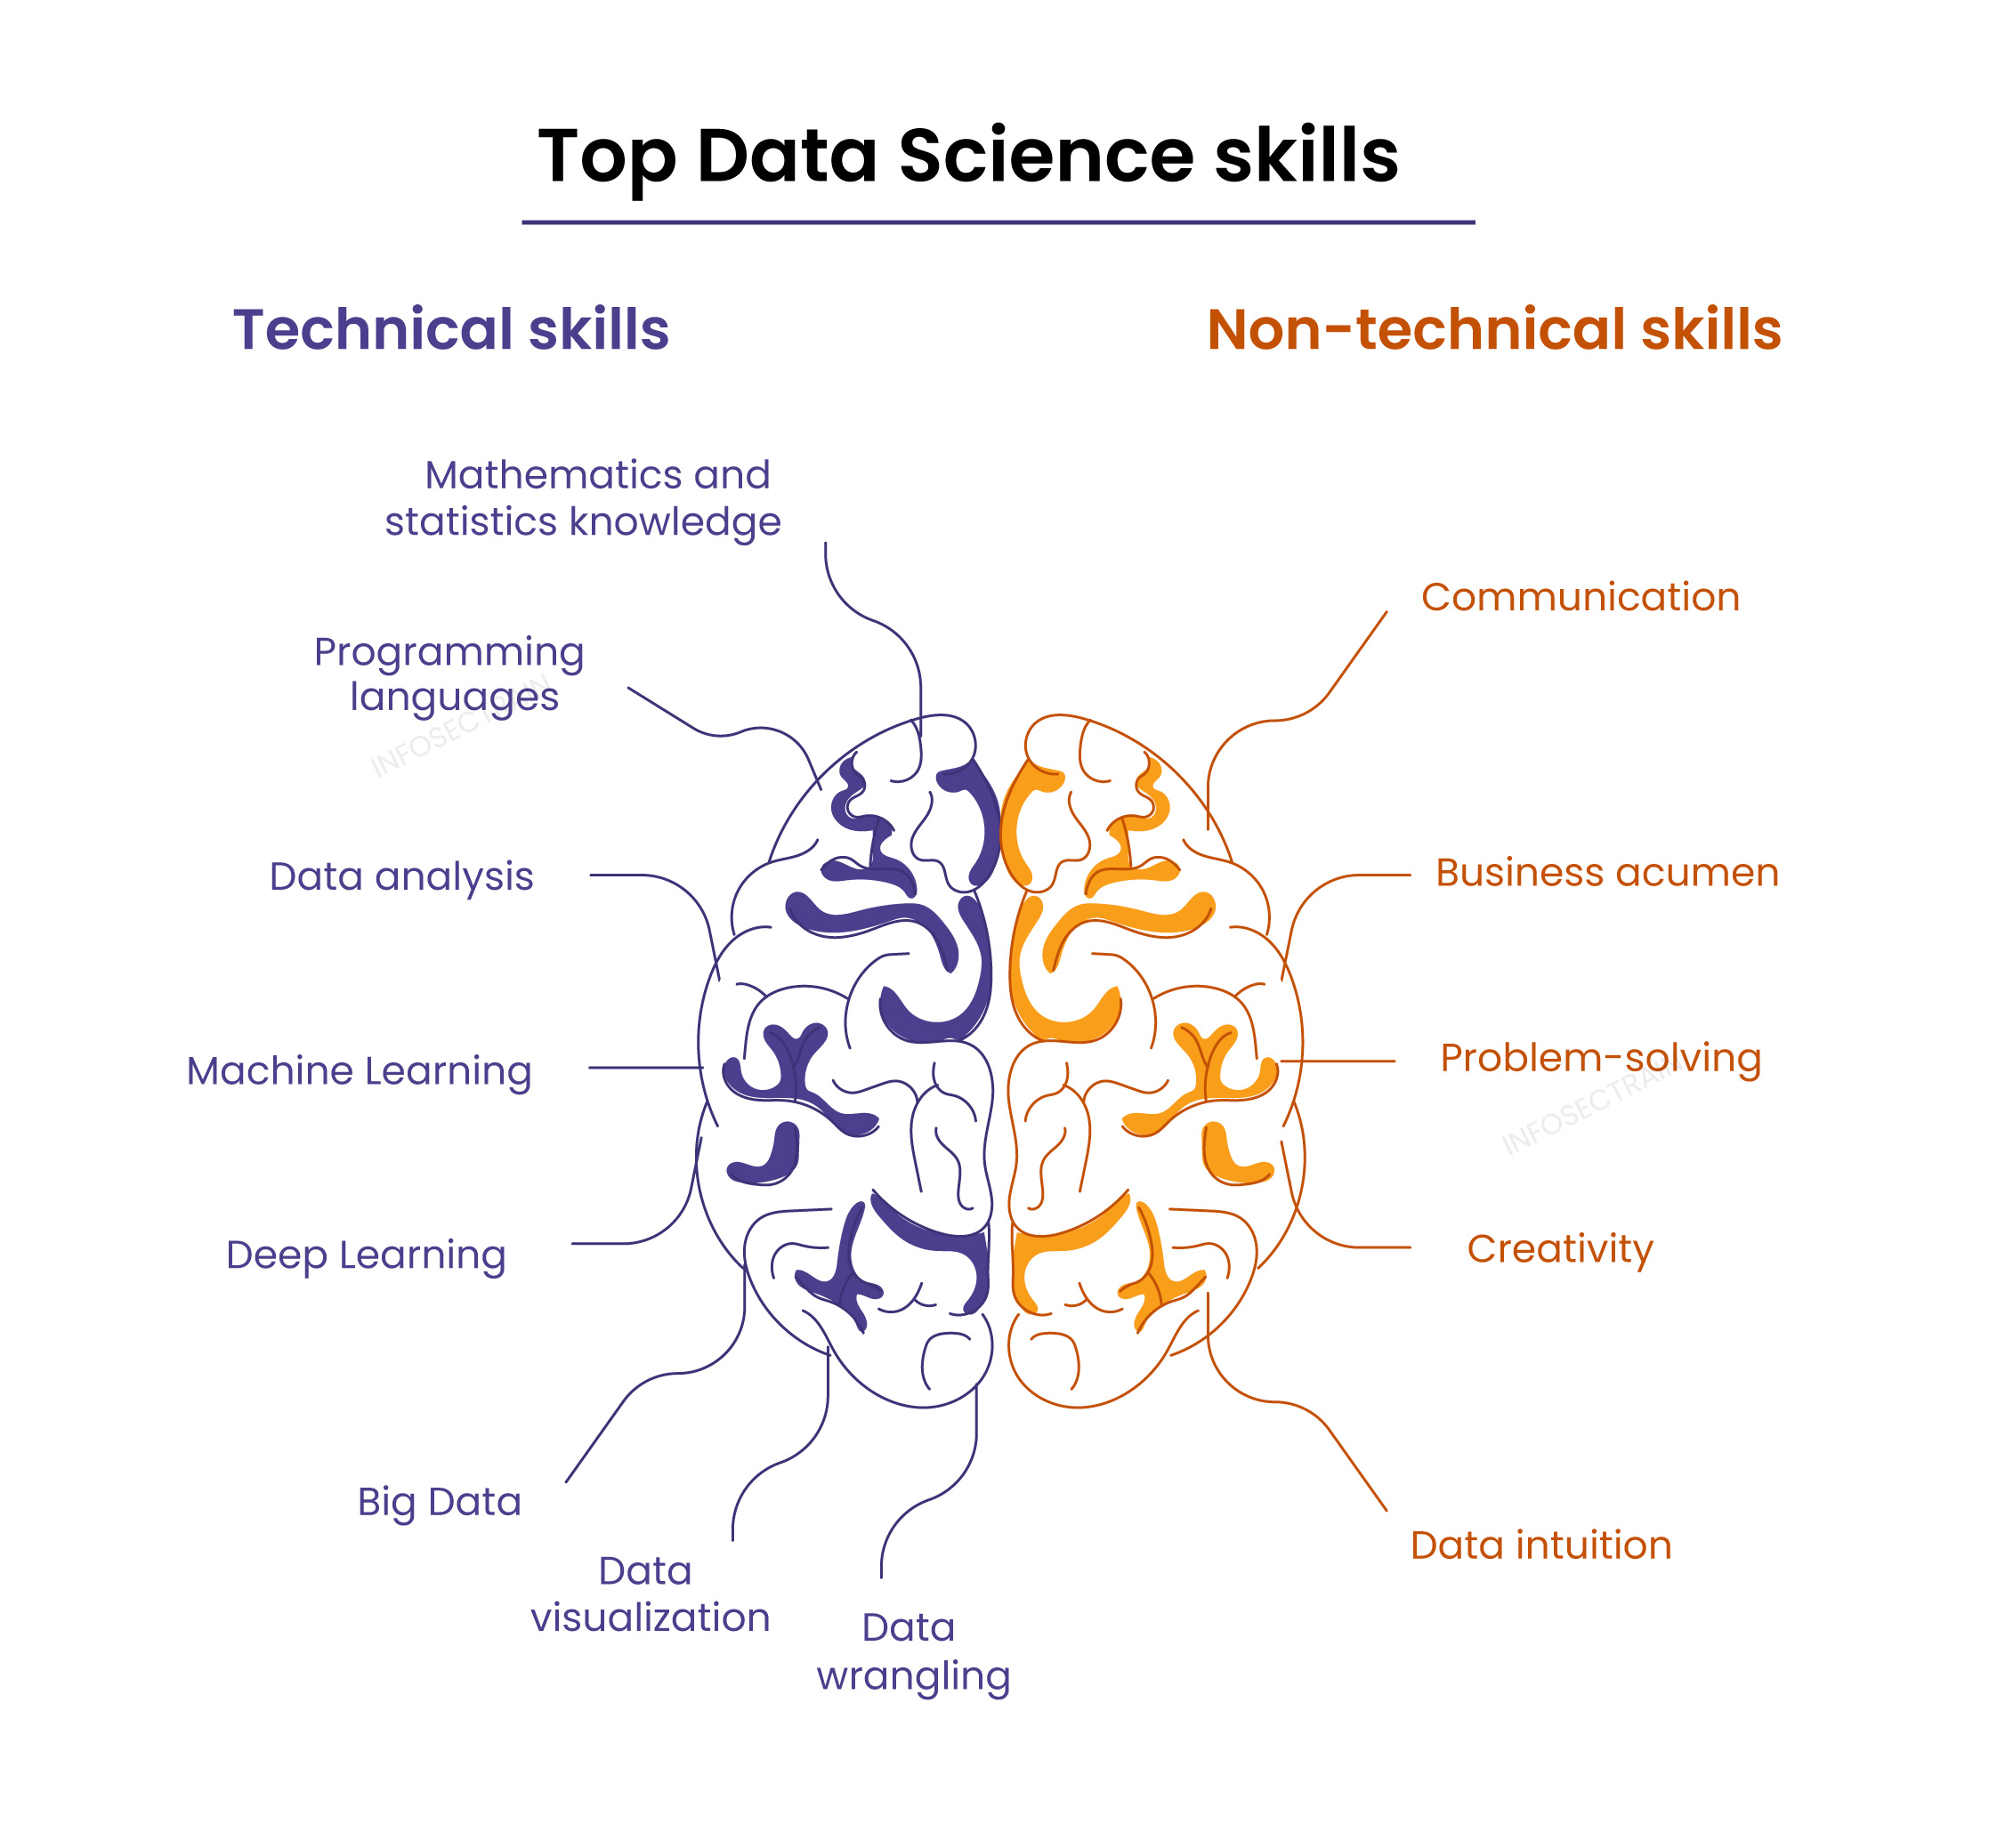 Top Data Science skills